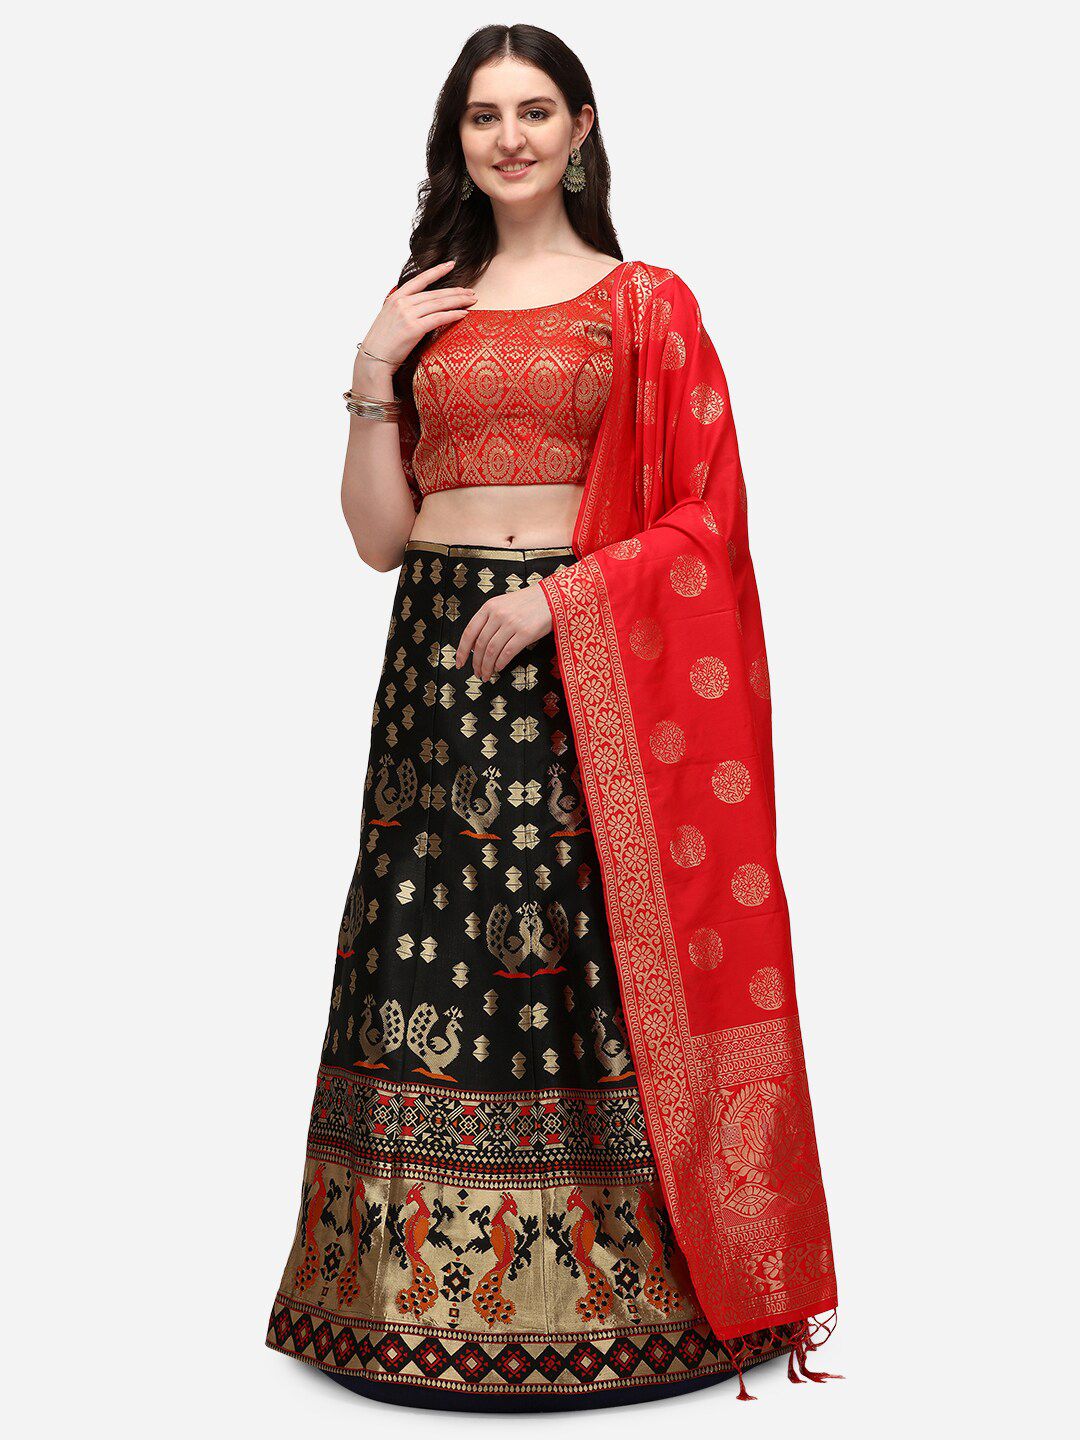 JATRIQQ Black & Red Semi-Stitched Lehenga & Unstitched Blouse With Dupatta Price in India